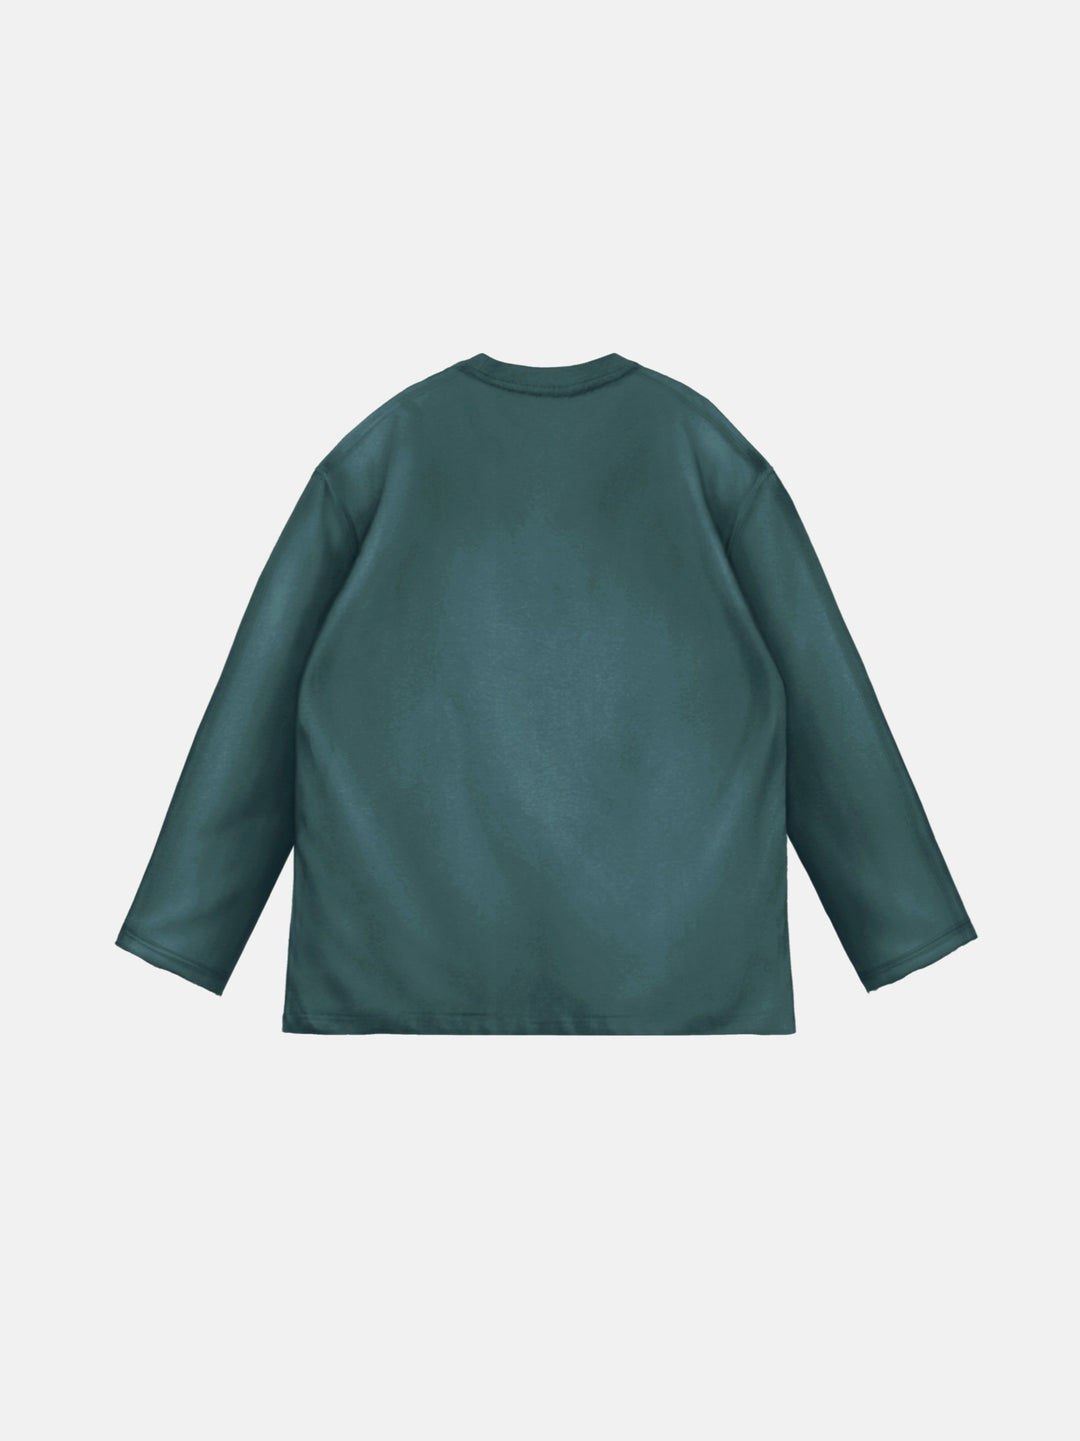 Loose Fit Basic Sweater - Petrol